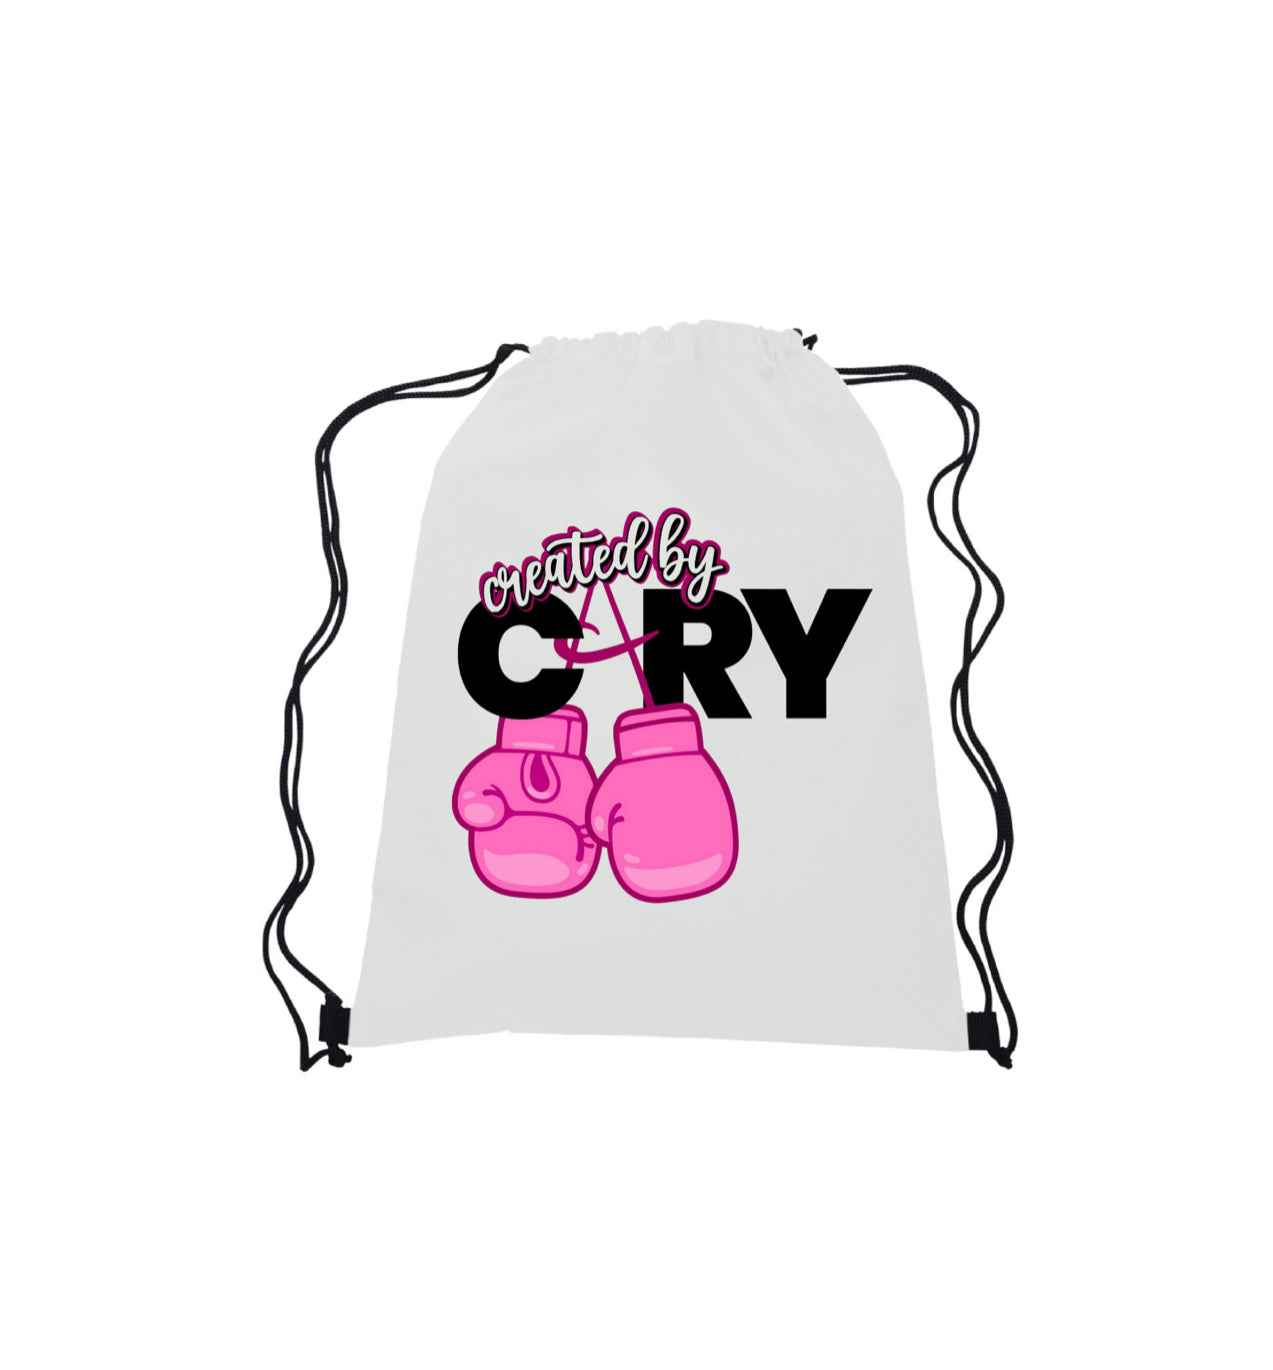 CreatedByCary merch tumblers/tote bags/hats/drawstring bag